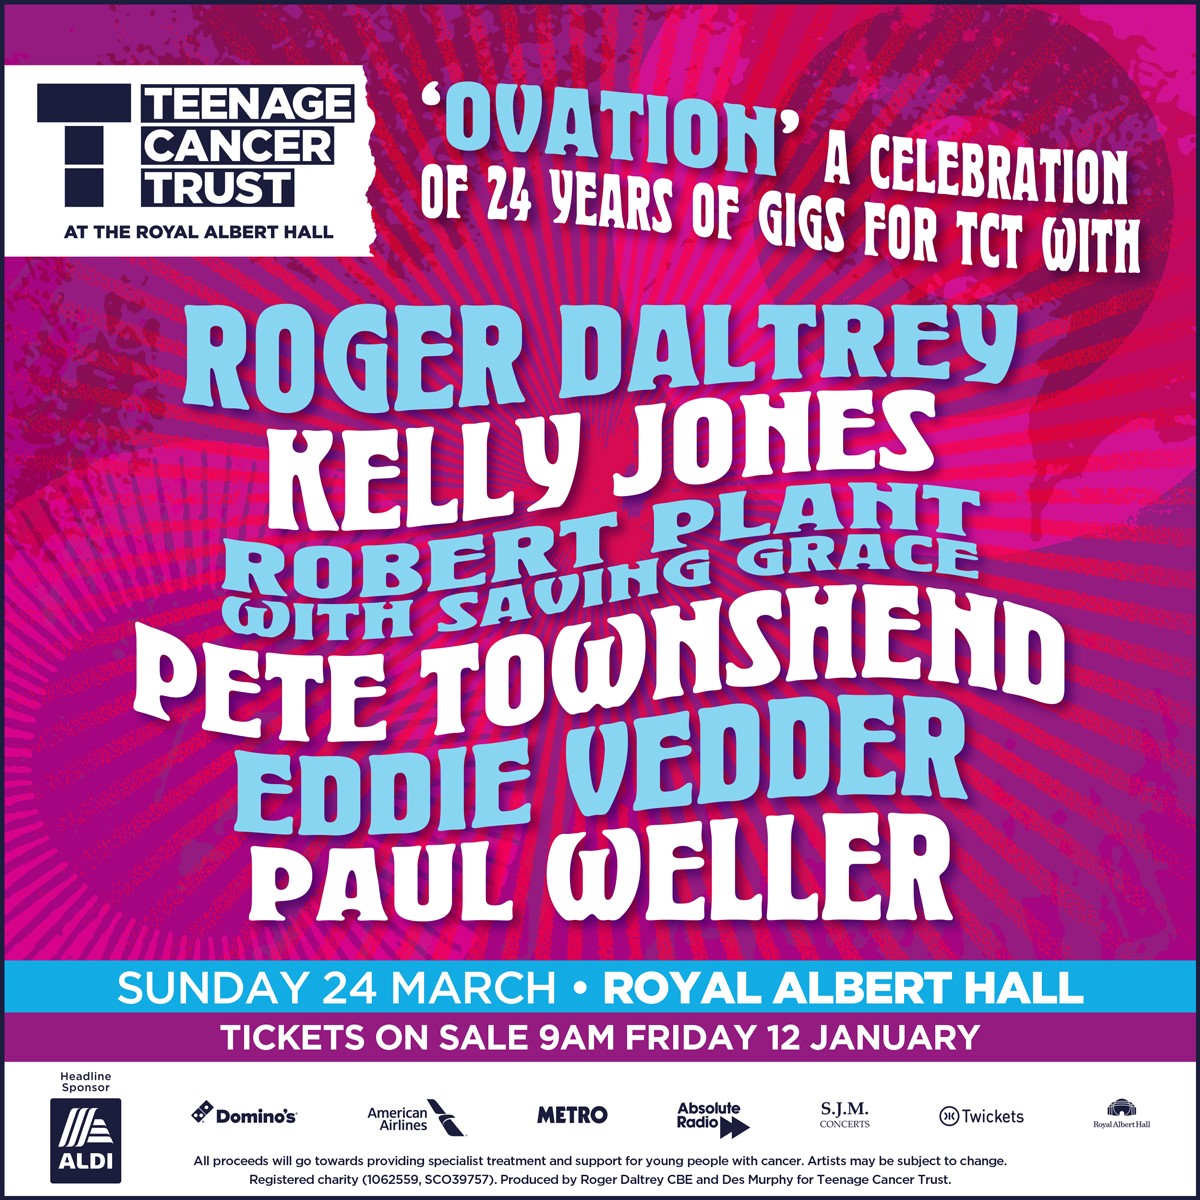 Eddie will be performing @RoyalAlbertHall in March for @TeenageCancer’s #TeenageCancerGigs. Tickets on sale Friday 12 Jan at 9:00am: teenagecancertrust.org/gigs